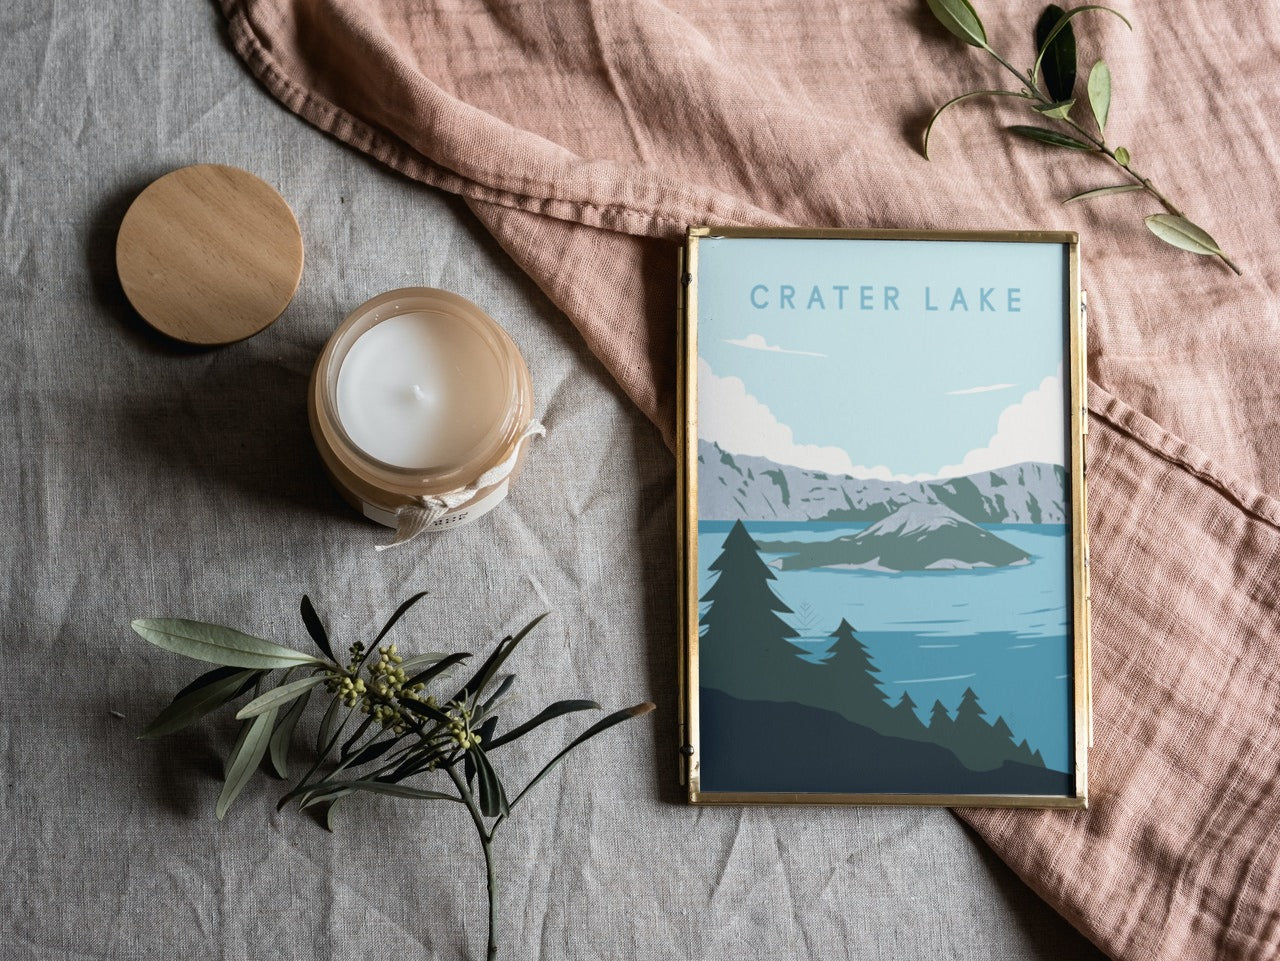 Crater Lake Travel Poster